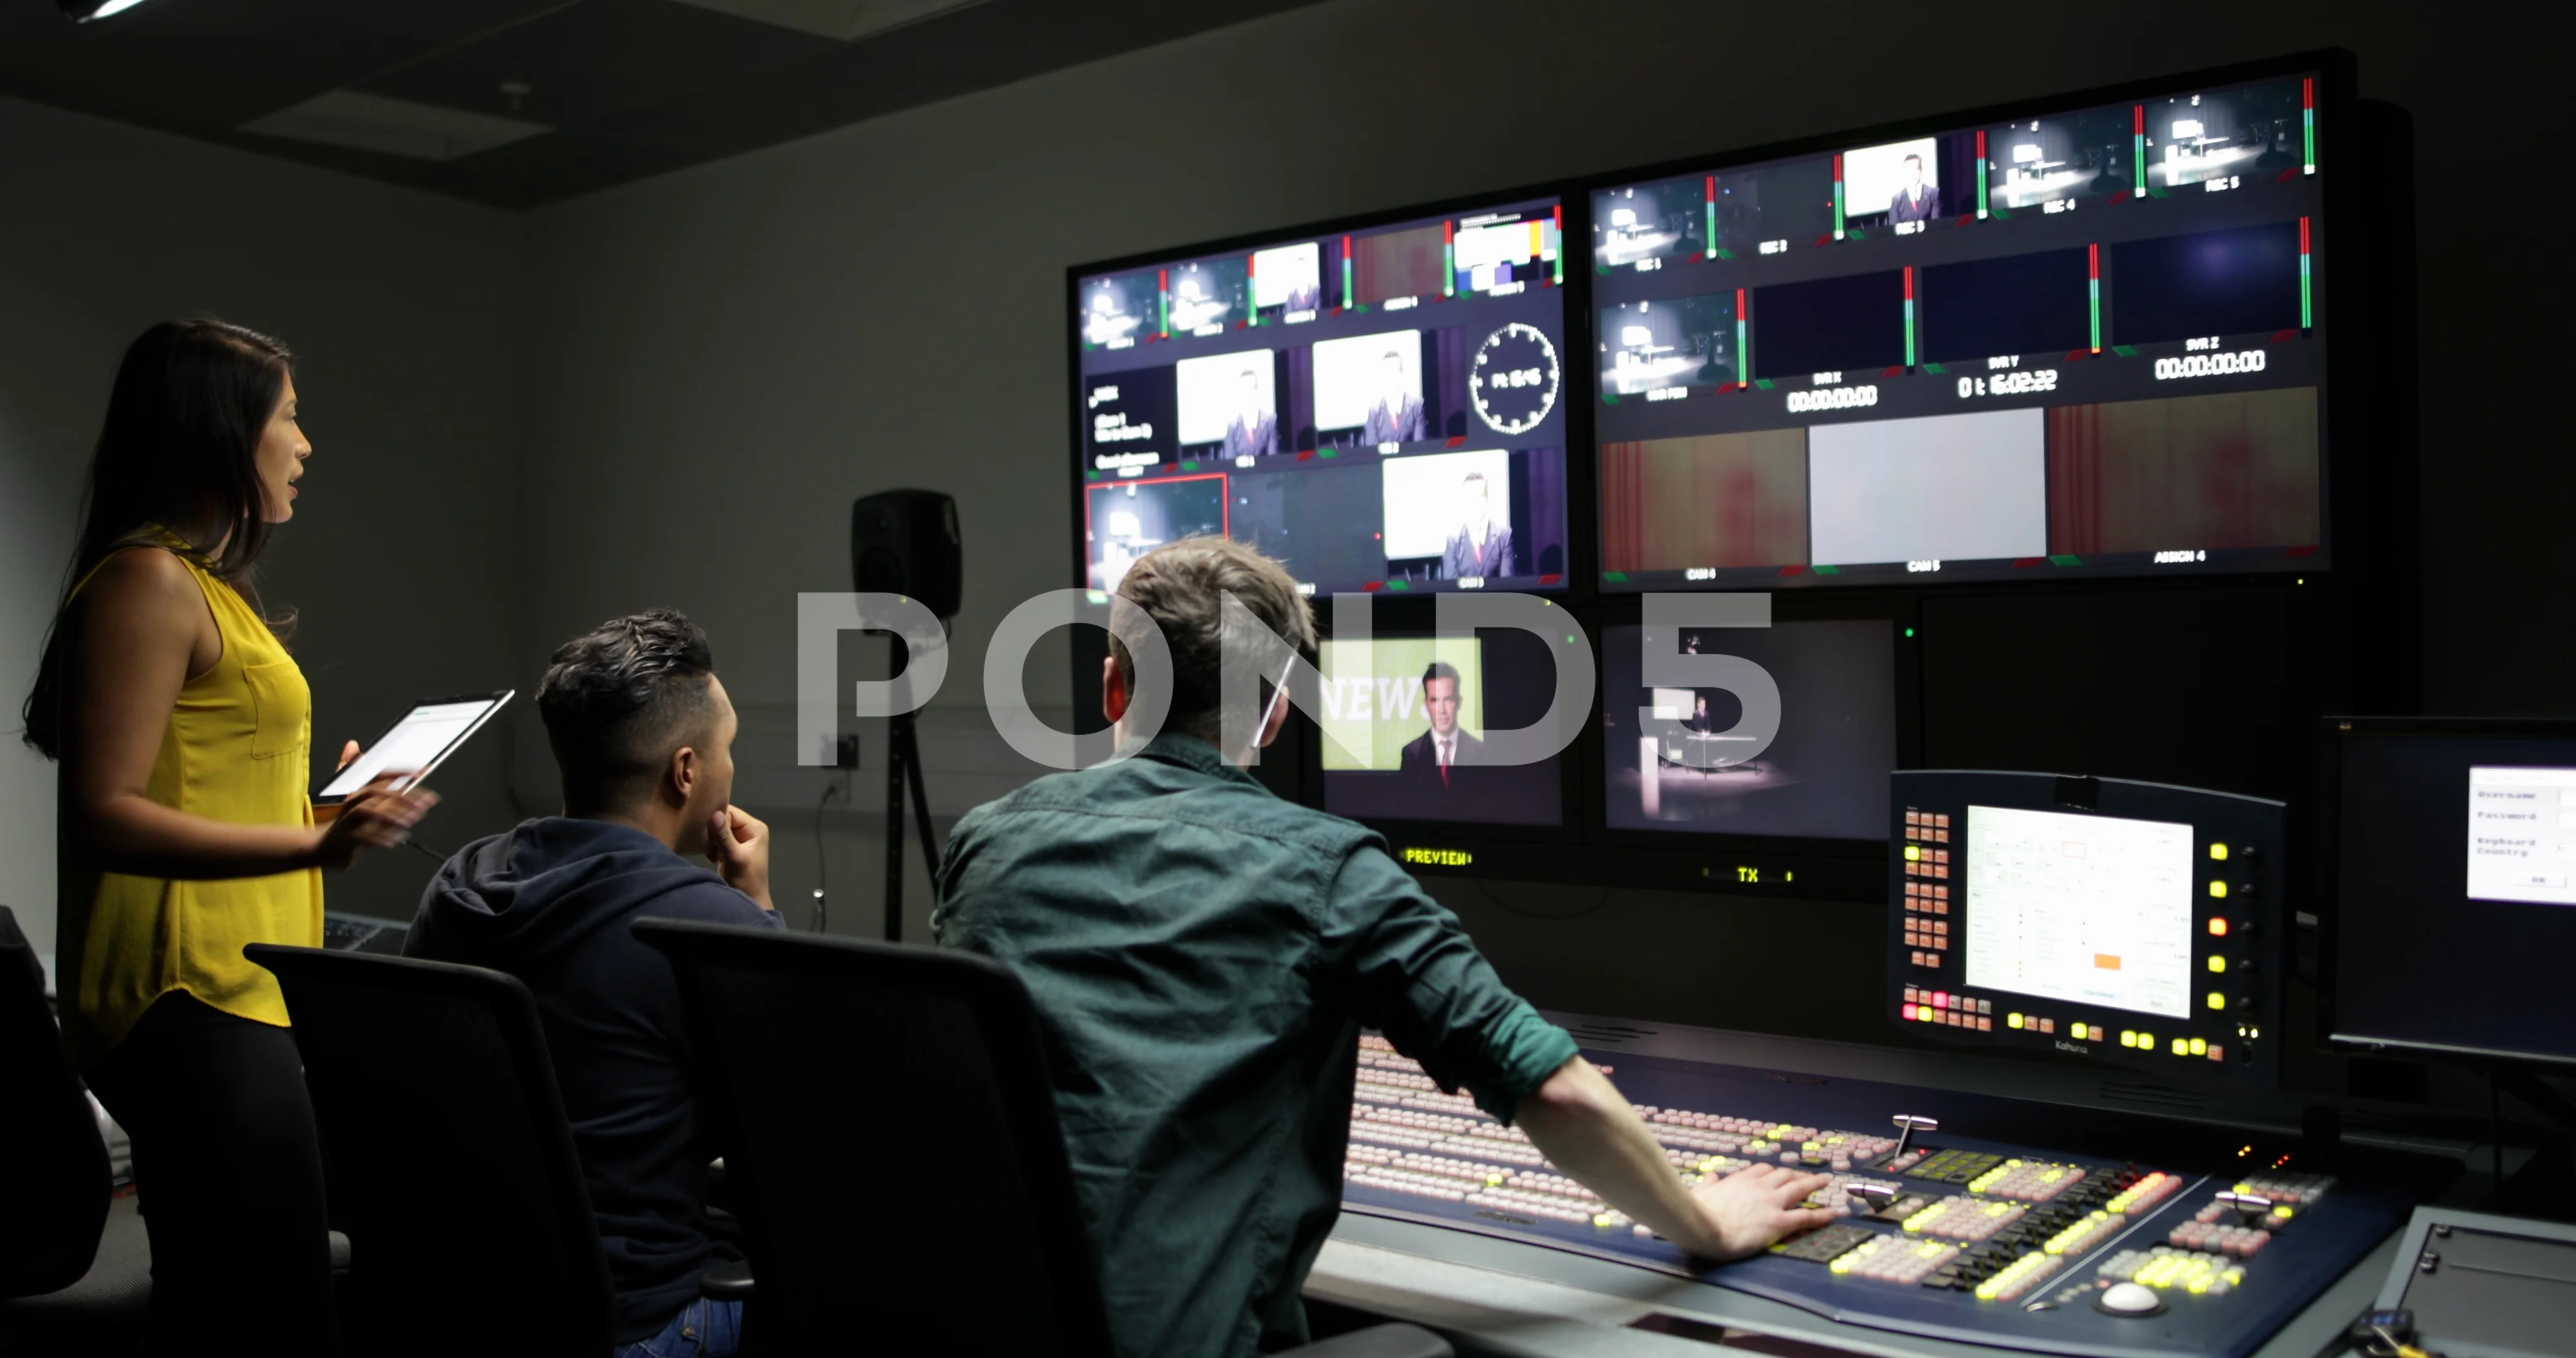 tv studio control room equipment